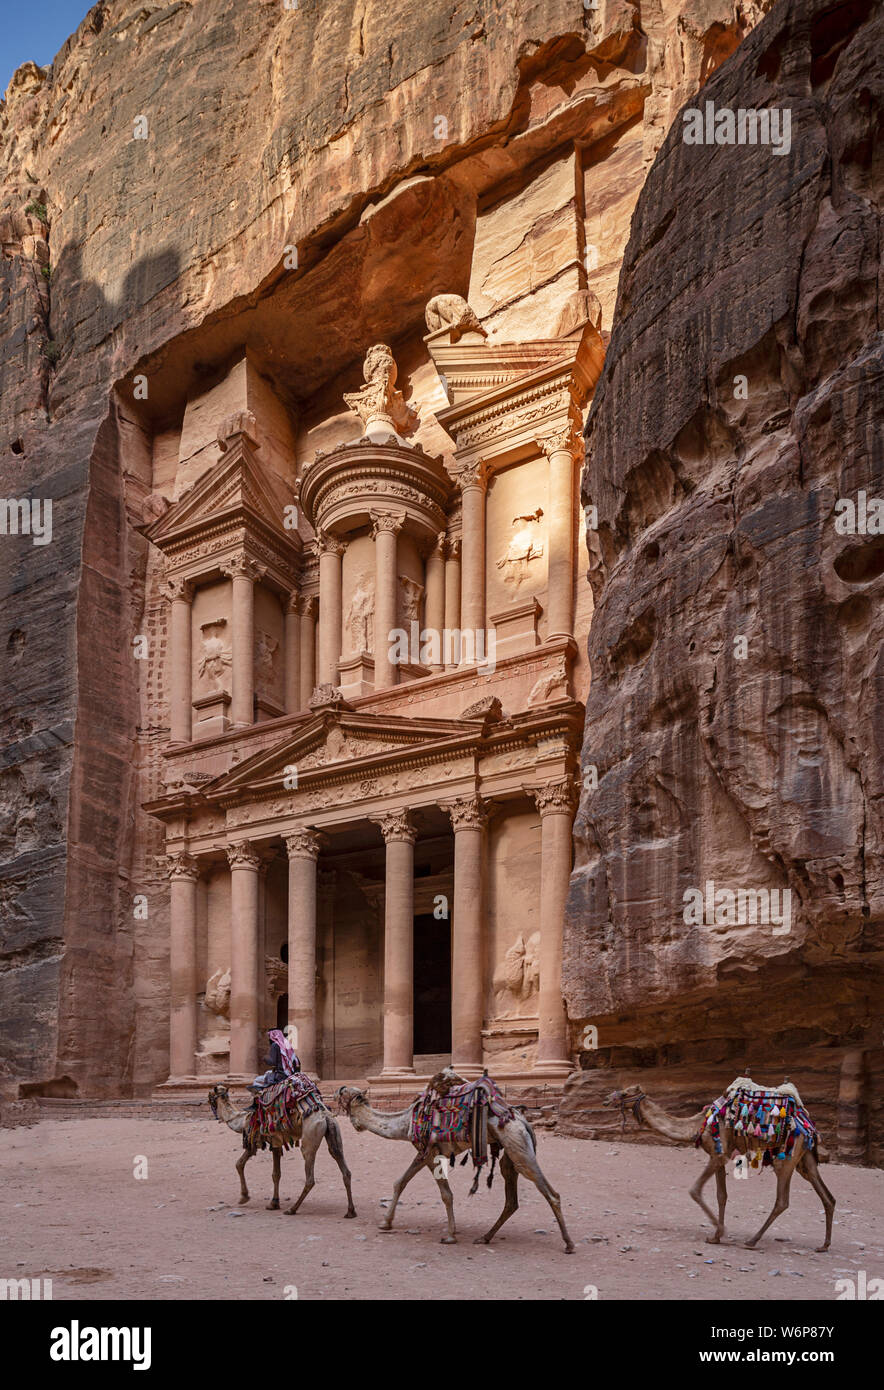 Das Finanzministerium oder Al-Khazneh in Petra, Jordanien. Stockfoto